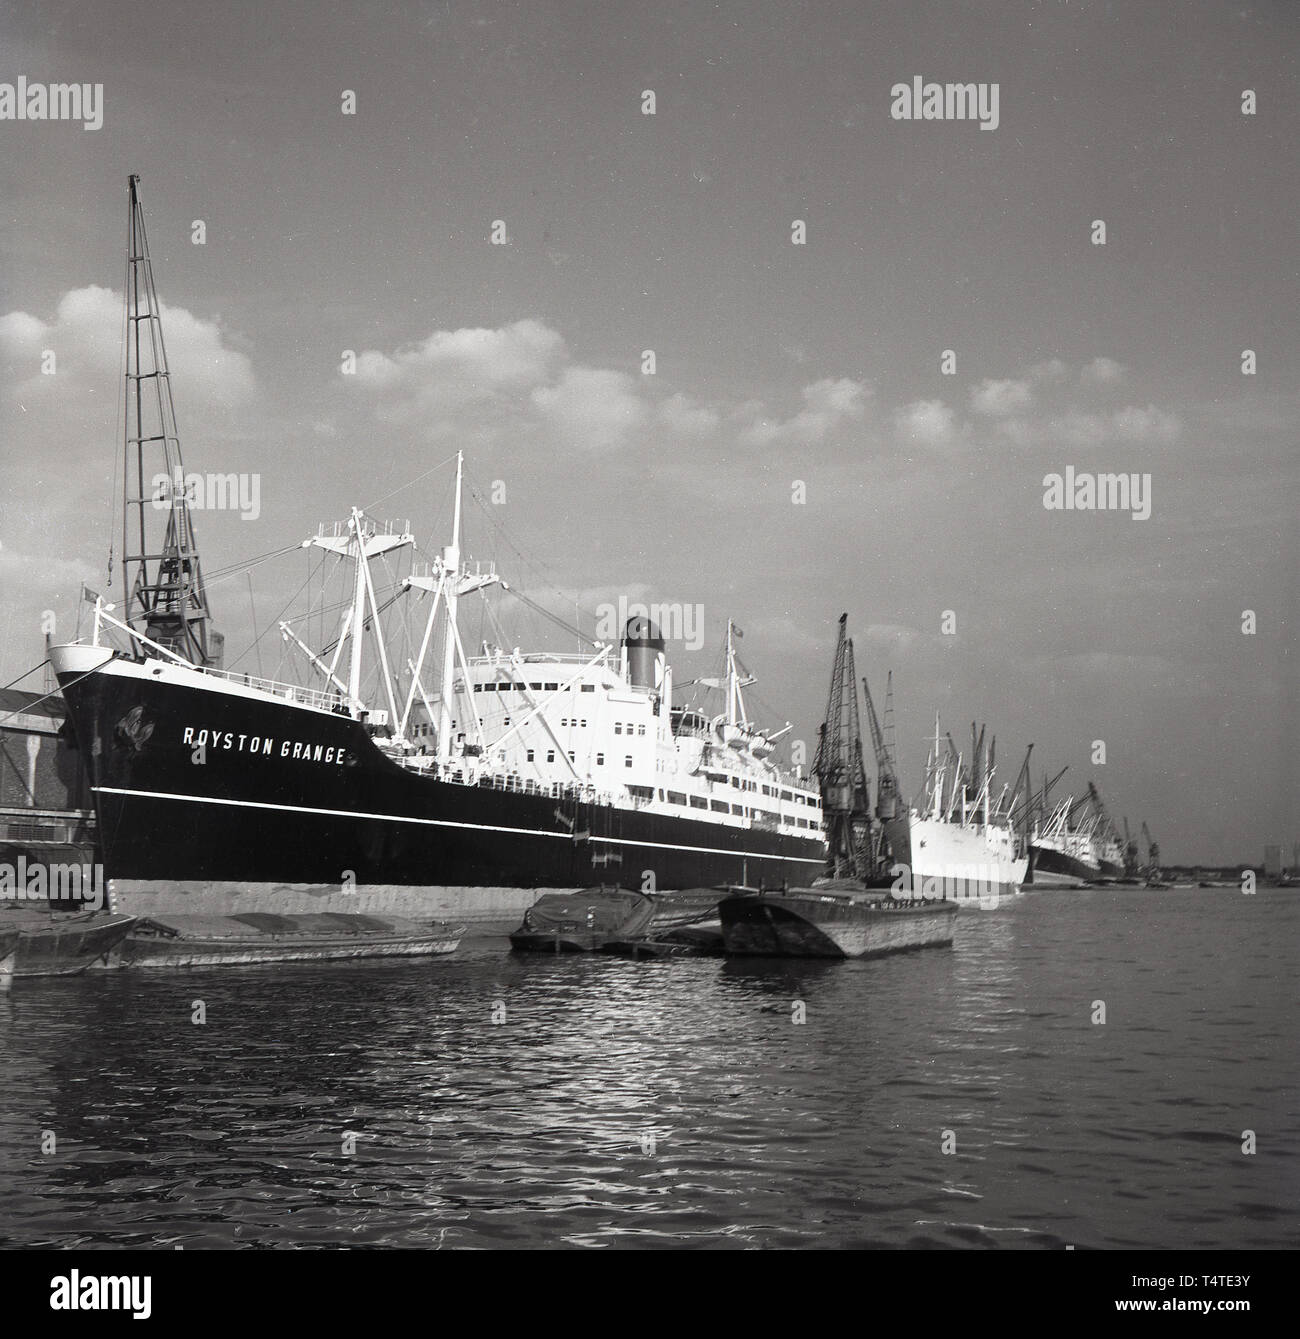 1960s, steam cruise ship, 'Royston Grange' moored at London Docks. Stock Photo